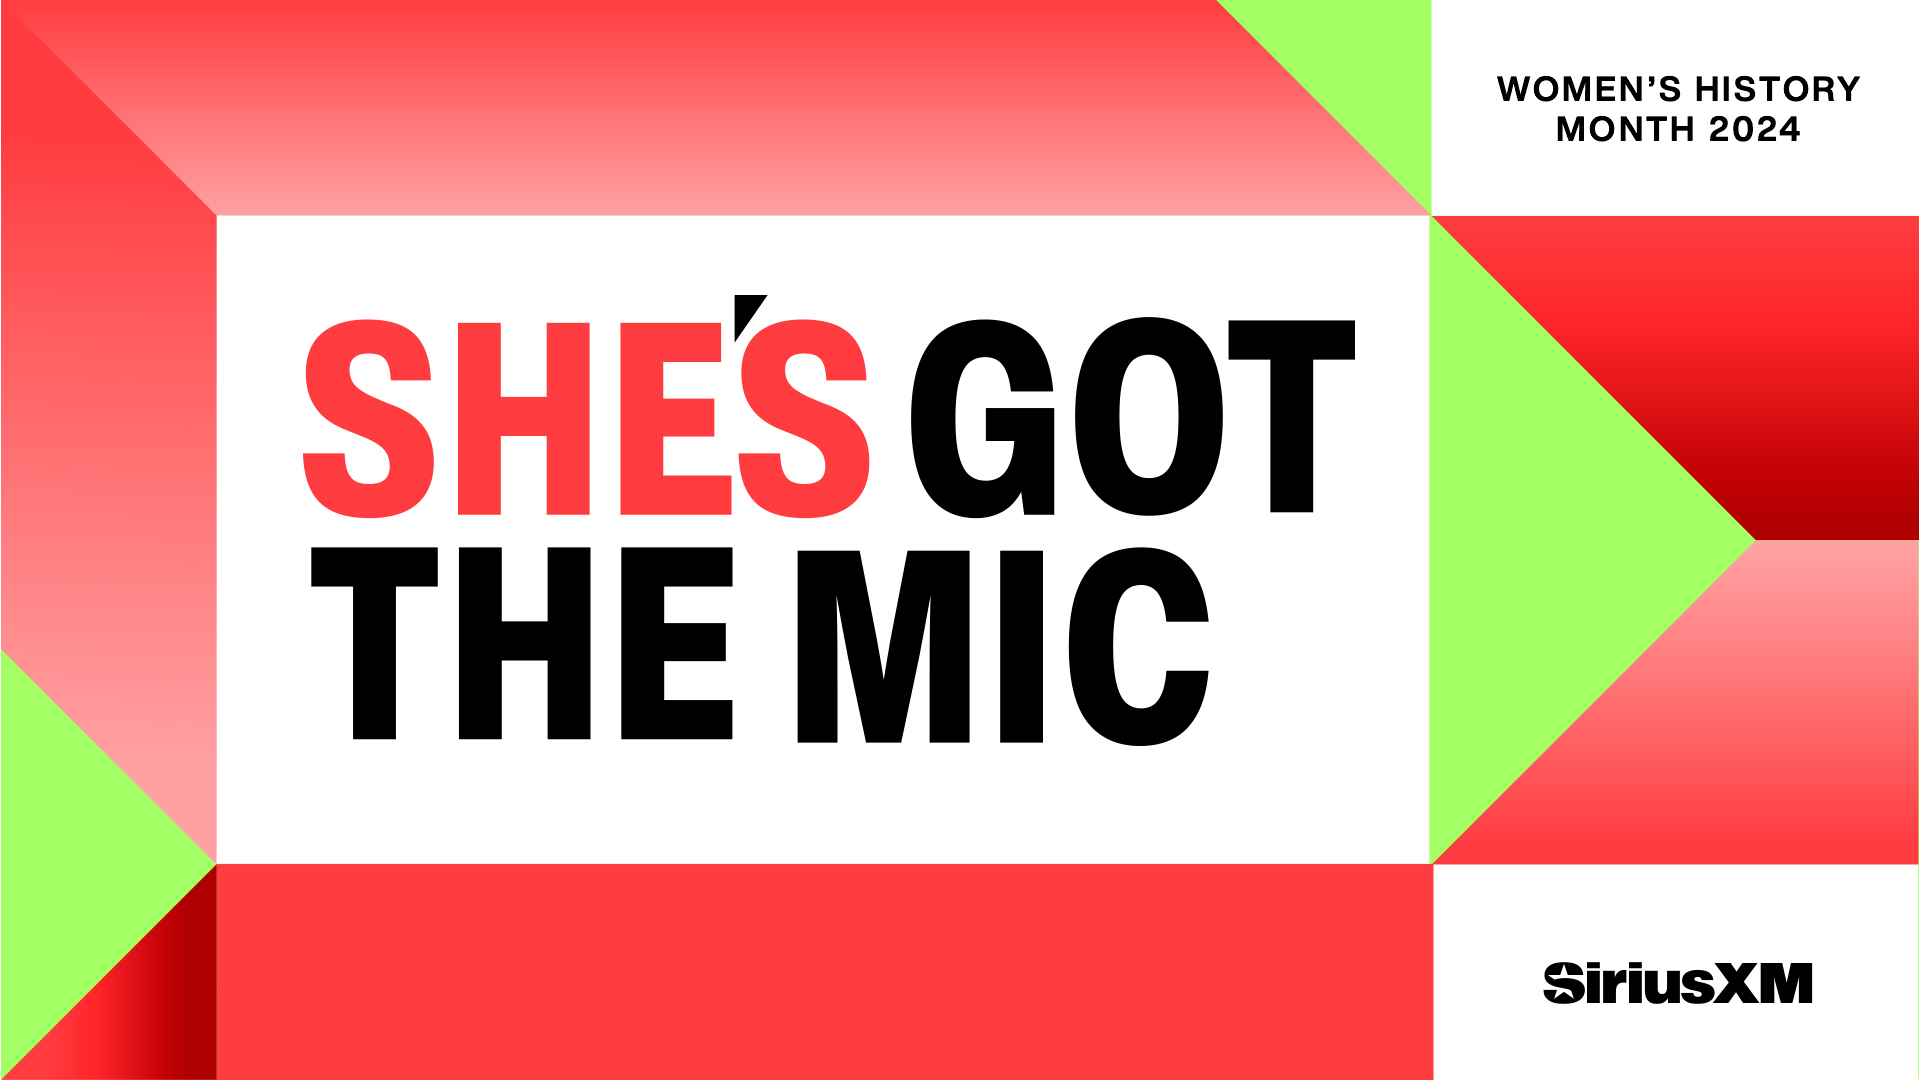 Women's History Month on SiriusXM - She's Got the Mic